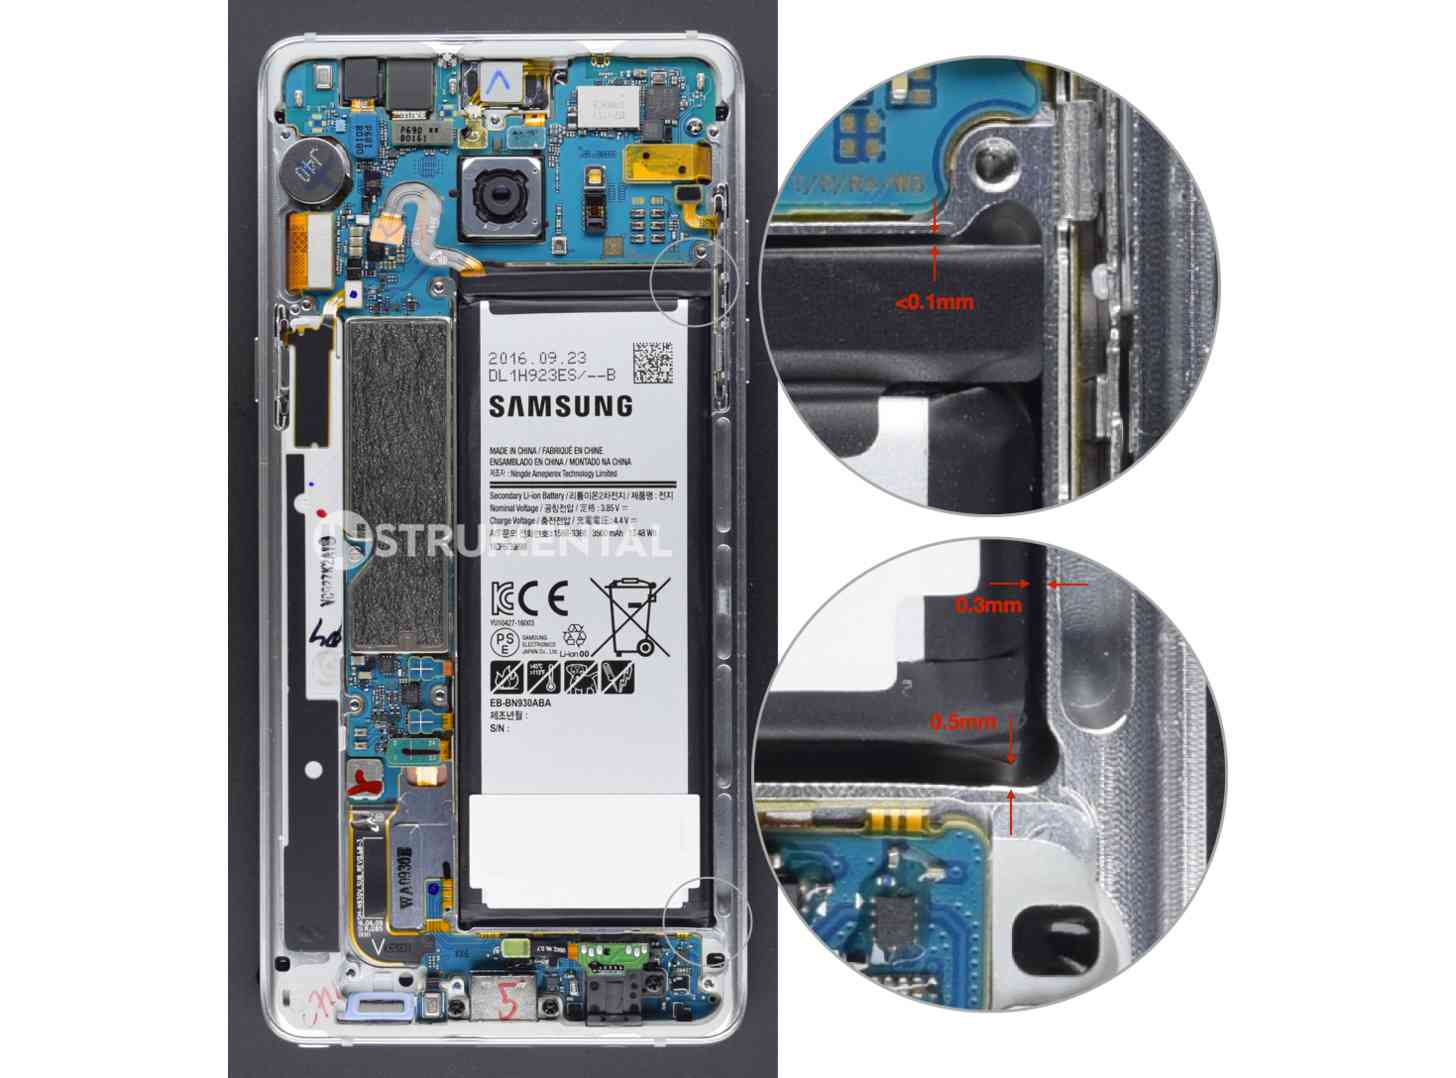 Samsung Galaxy Note 7 battery examination